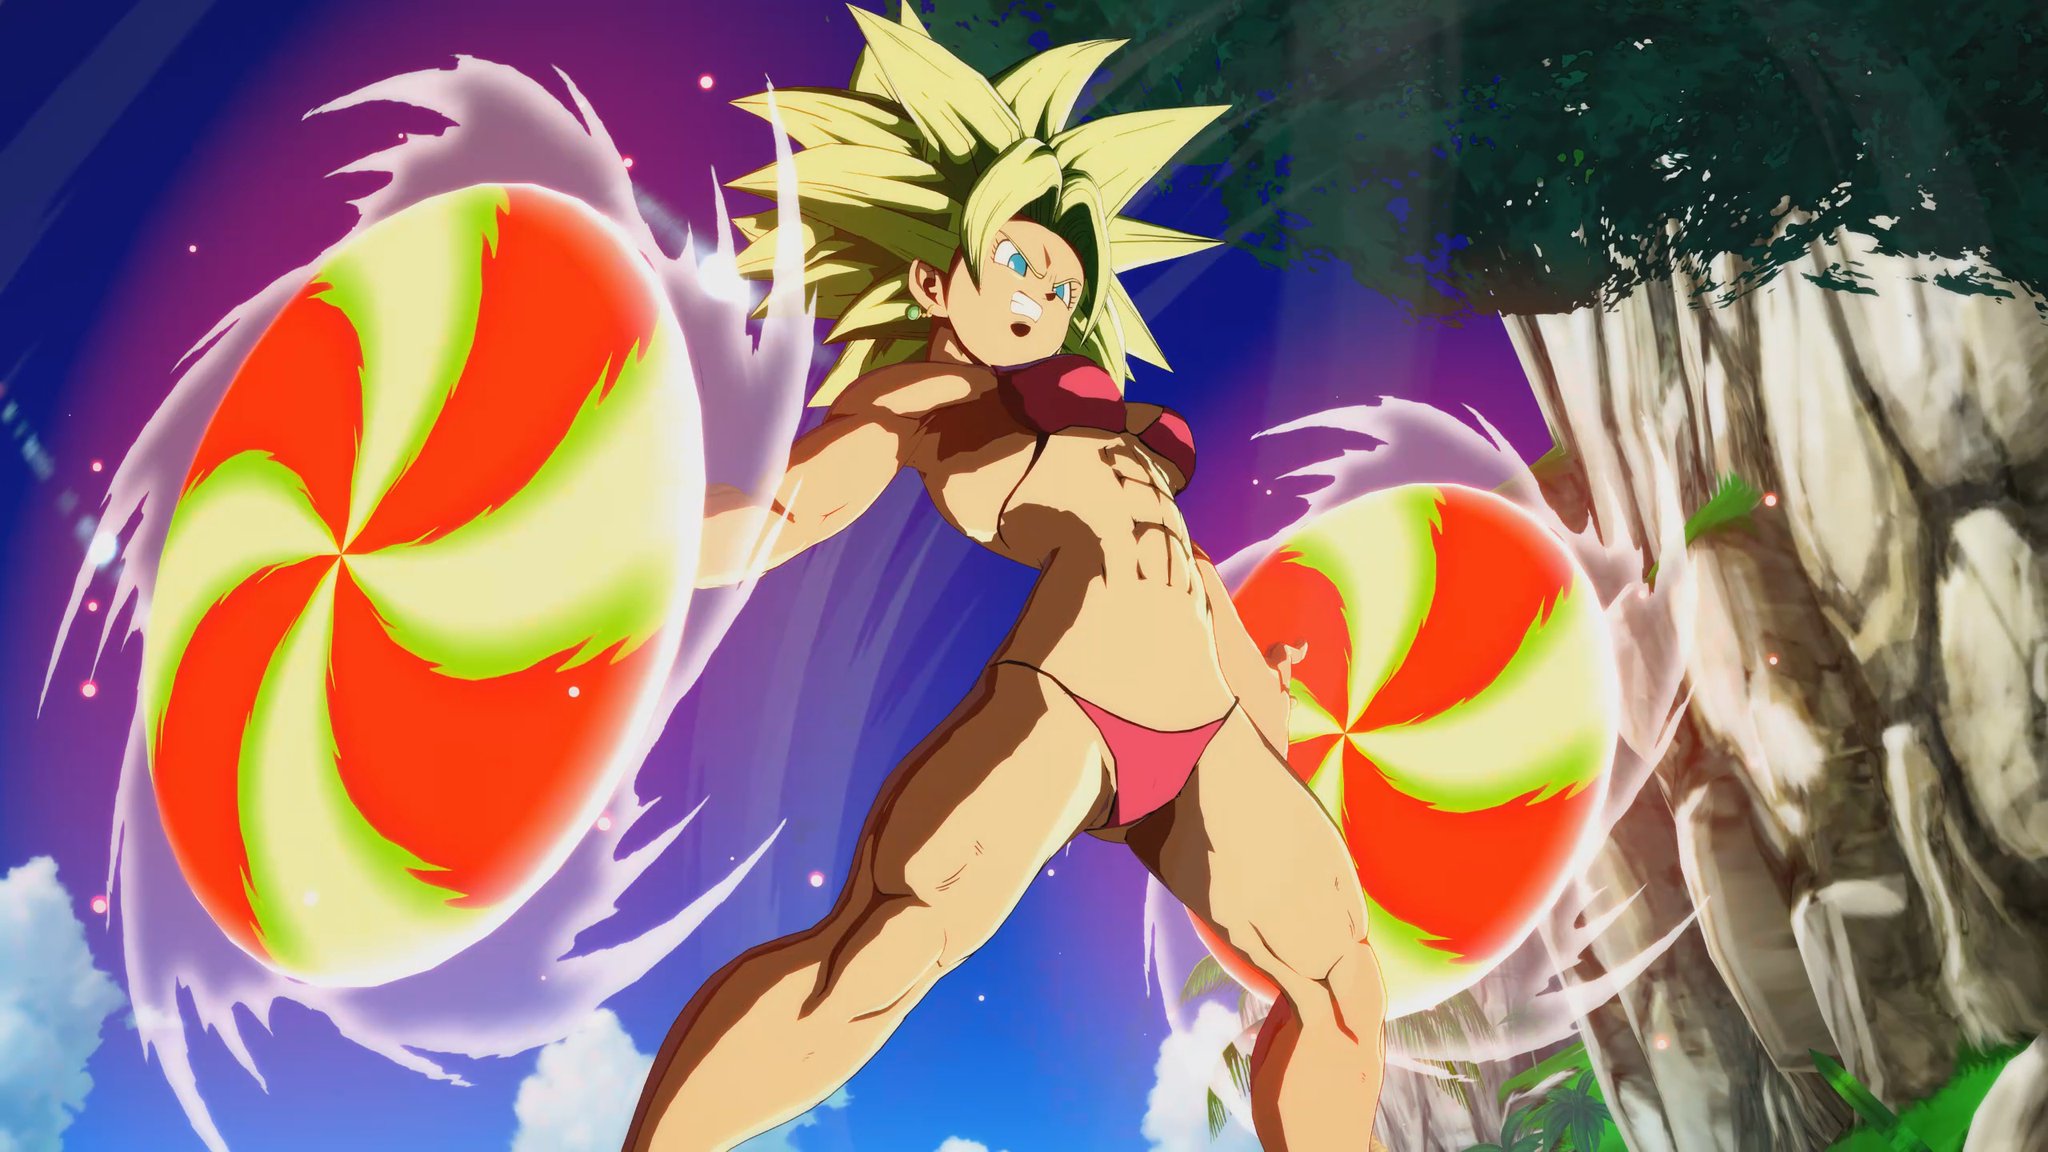 â€œDragon Ball FighterZ - Bikini Kefla vs Swimsuit Android 18 Gameplay (Costu...